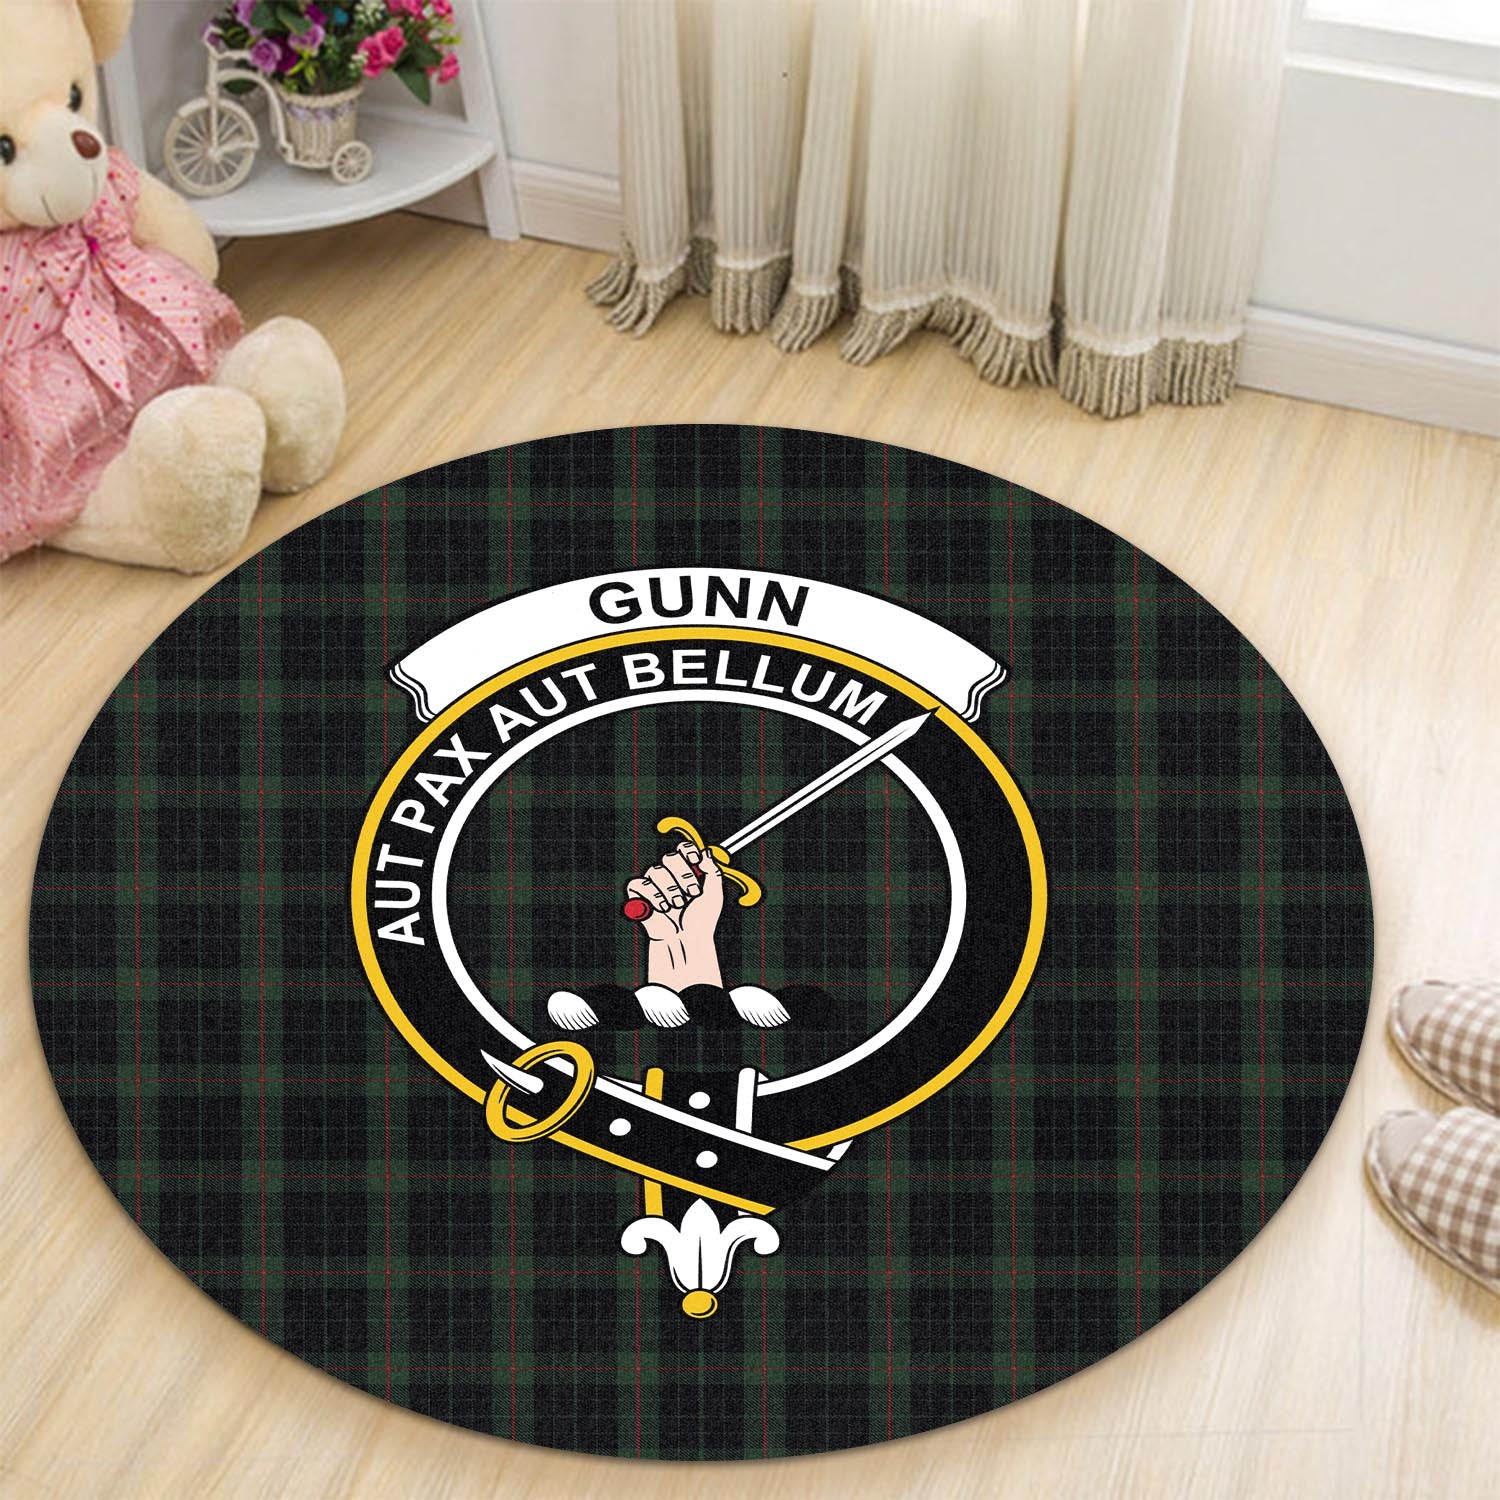 gunn-logan-tartan-round-rug-with-family-crest